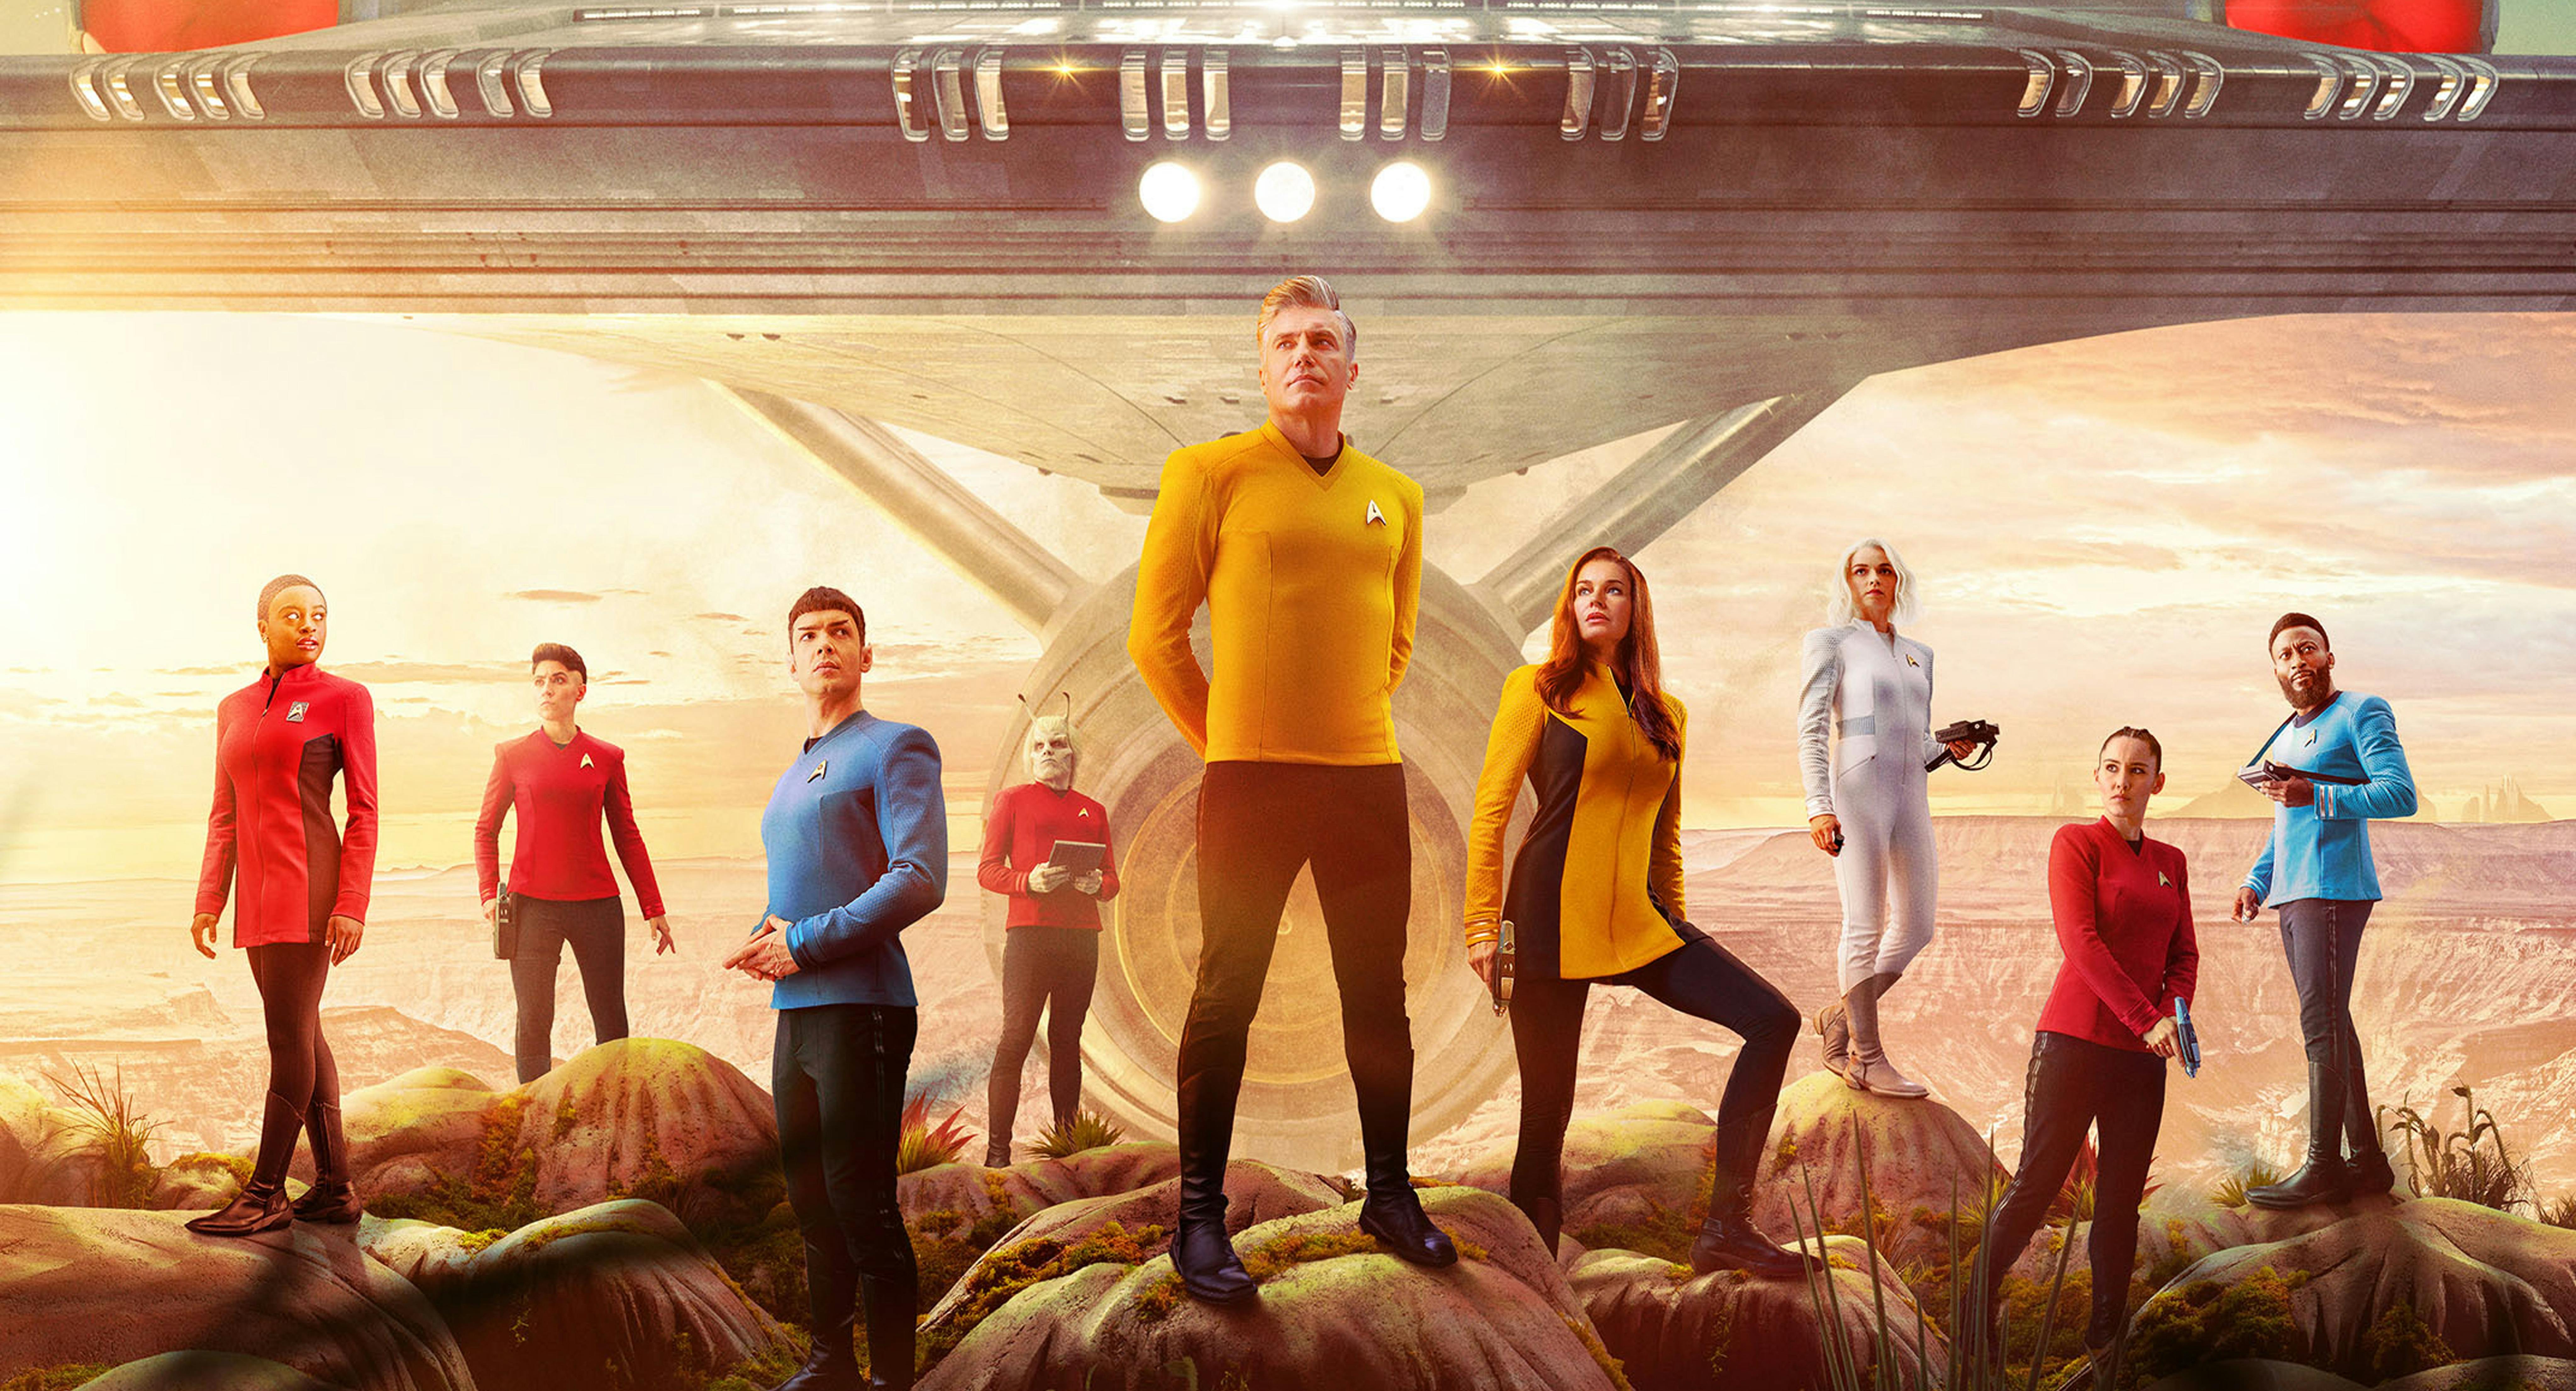 Star Trek: Discovery's Rebecca Romijn Releases First Look Photo Of